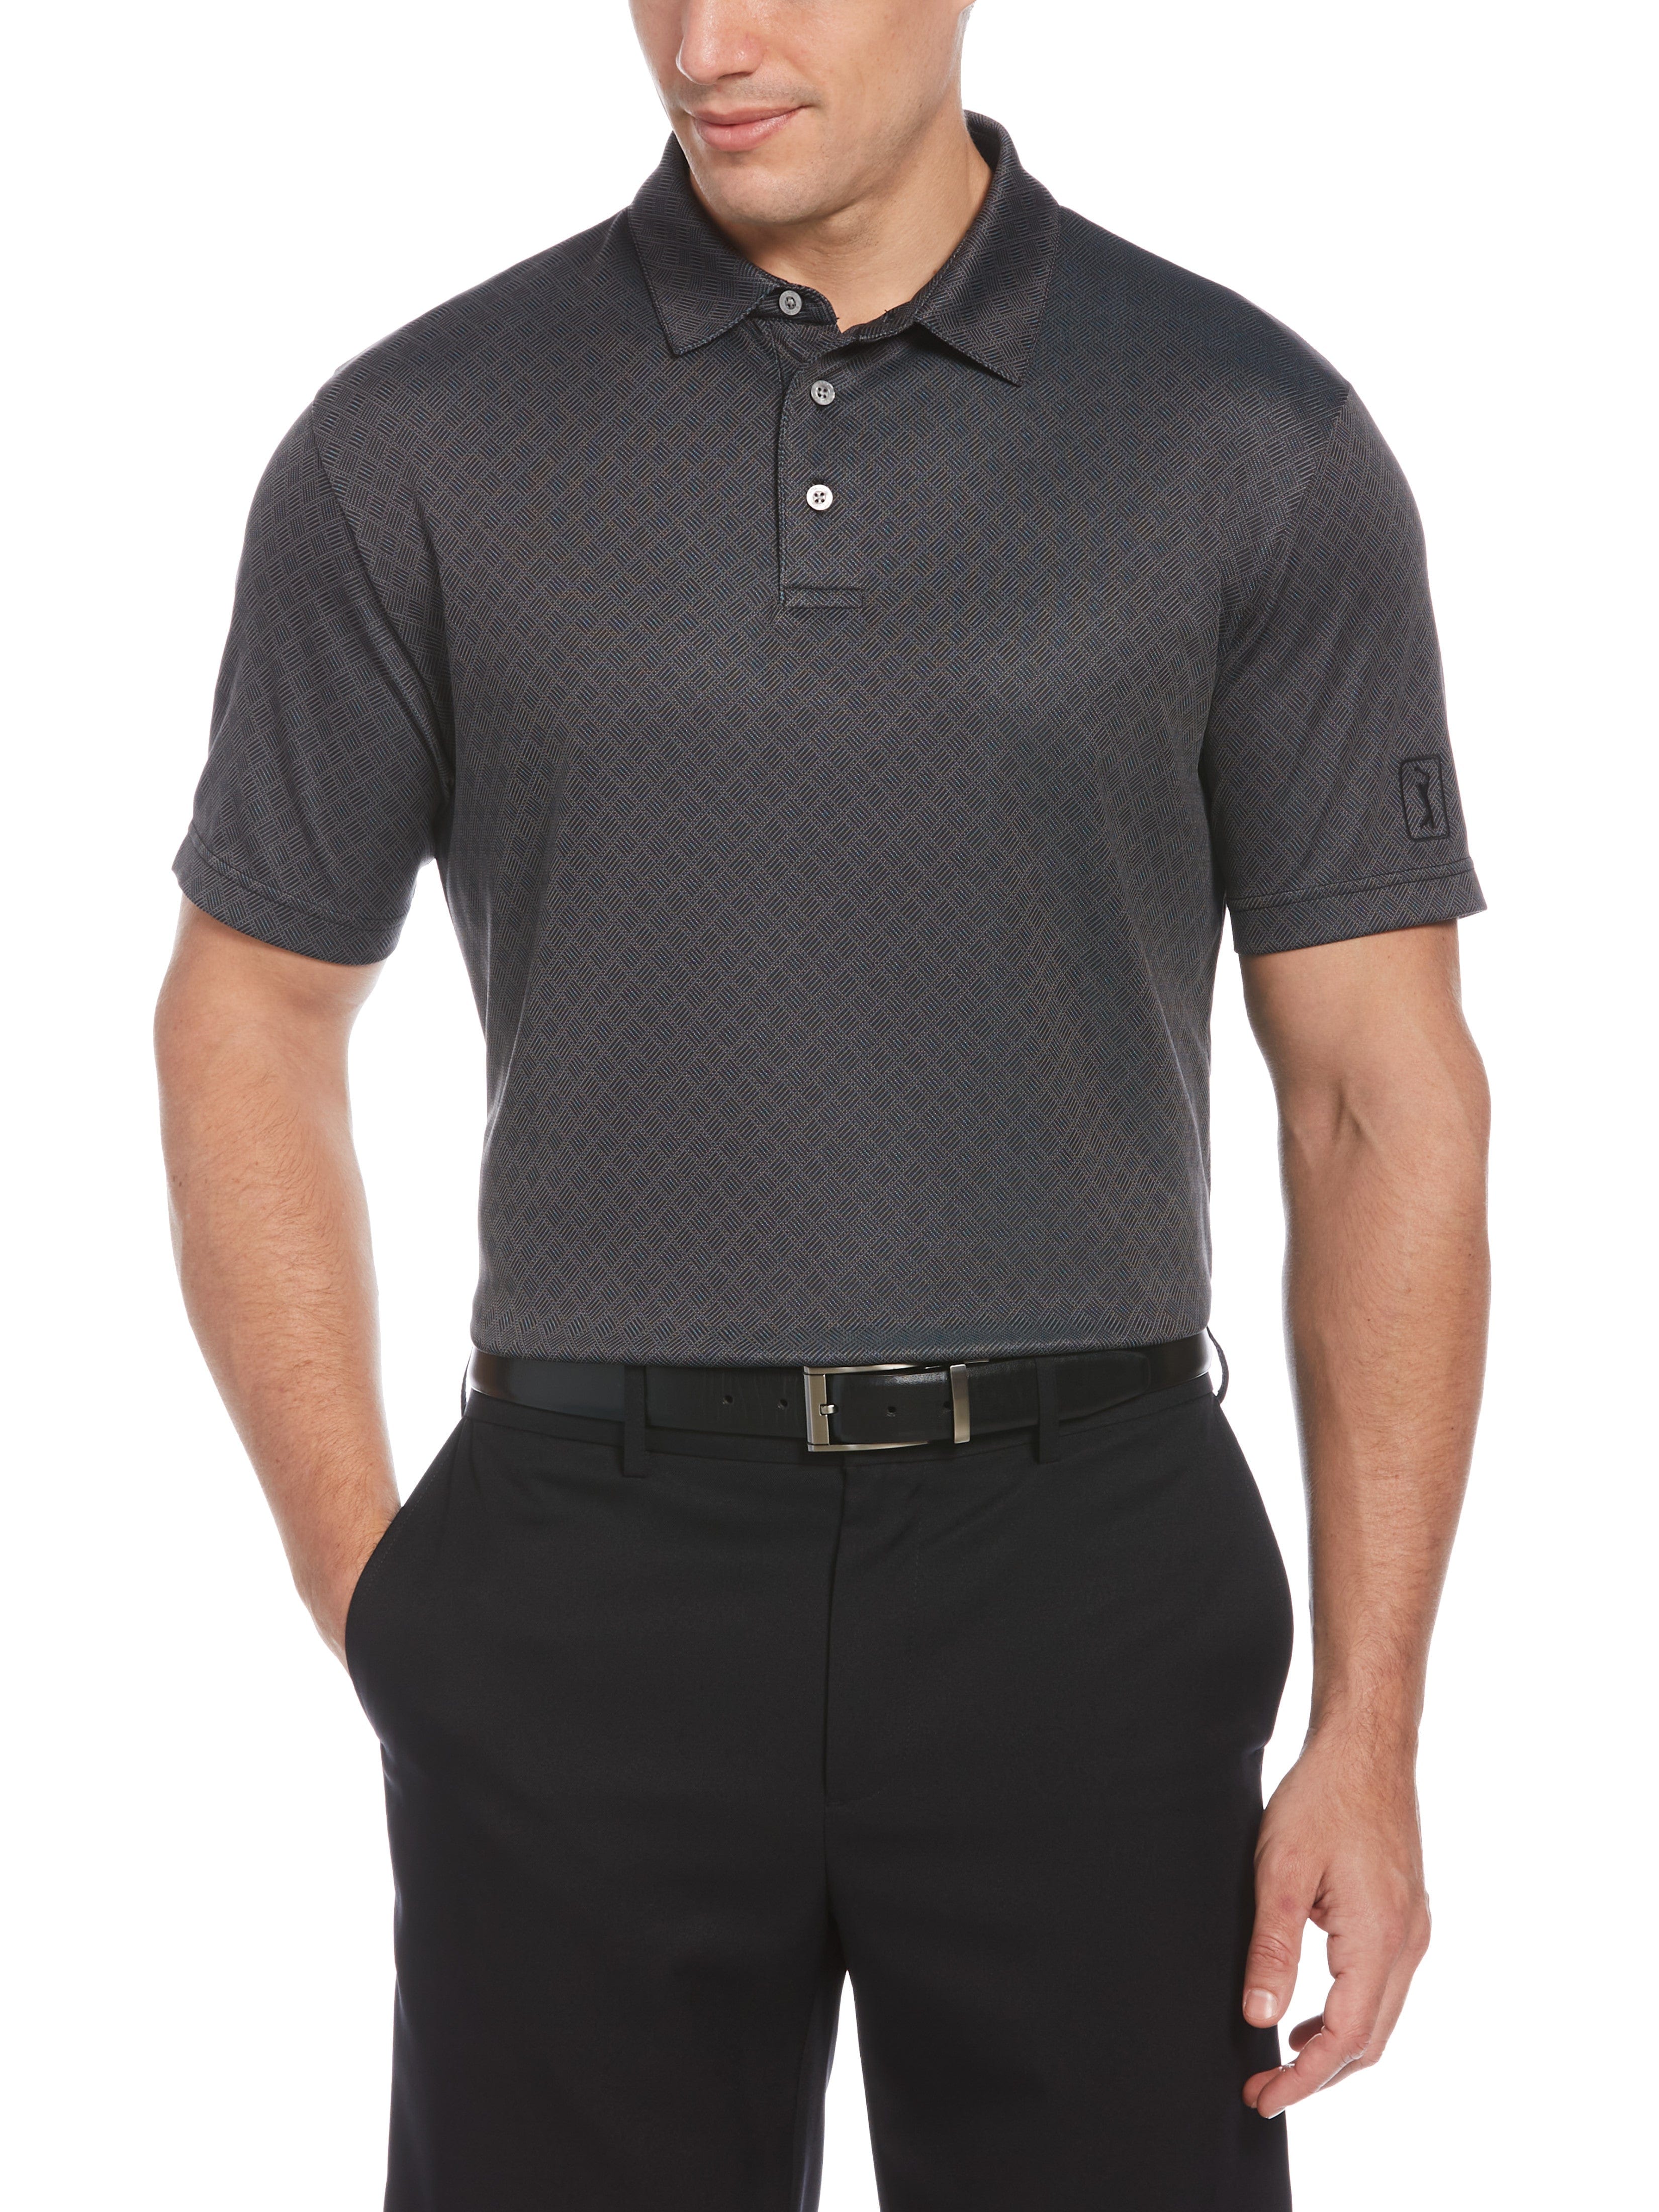 PGA TOUR Apparel Mens Diamond Jacquard Golf Polo Shirt, Size Medium, Black, 100% Polyester | Golf Apparel Shop